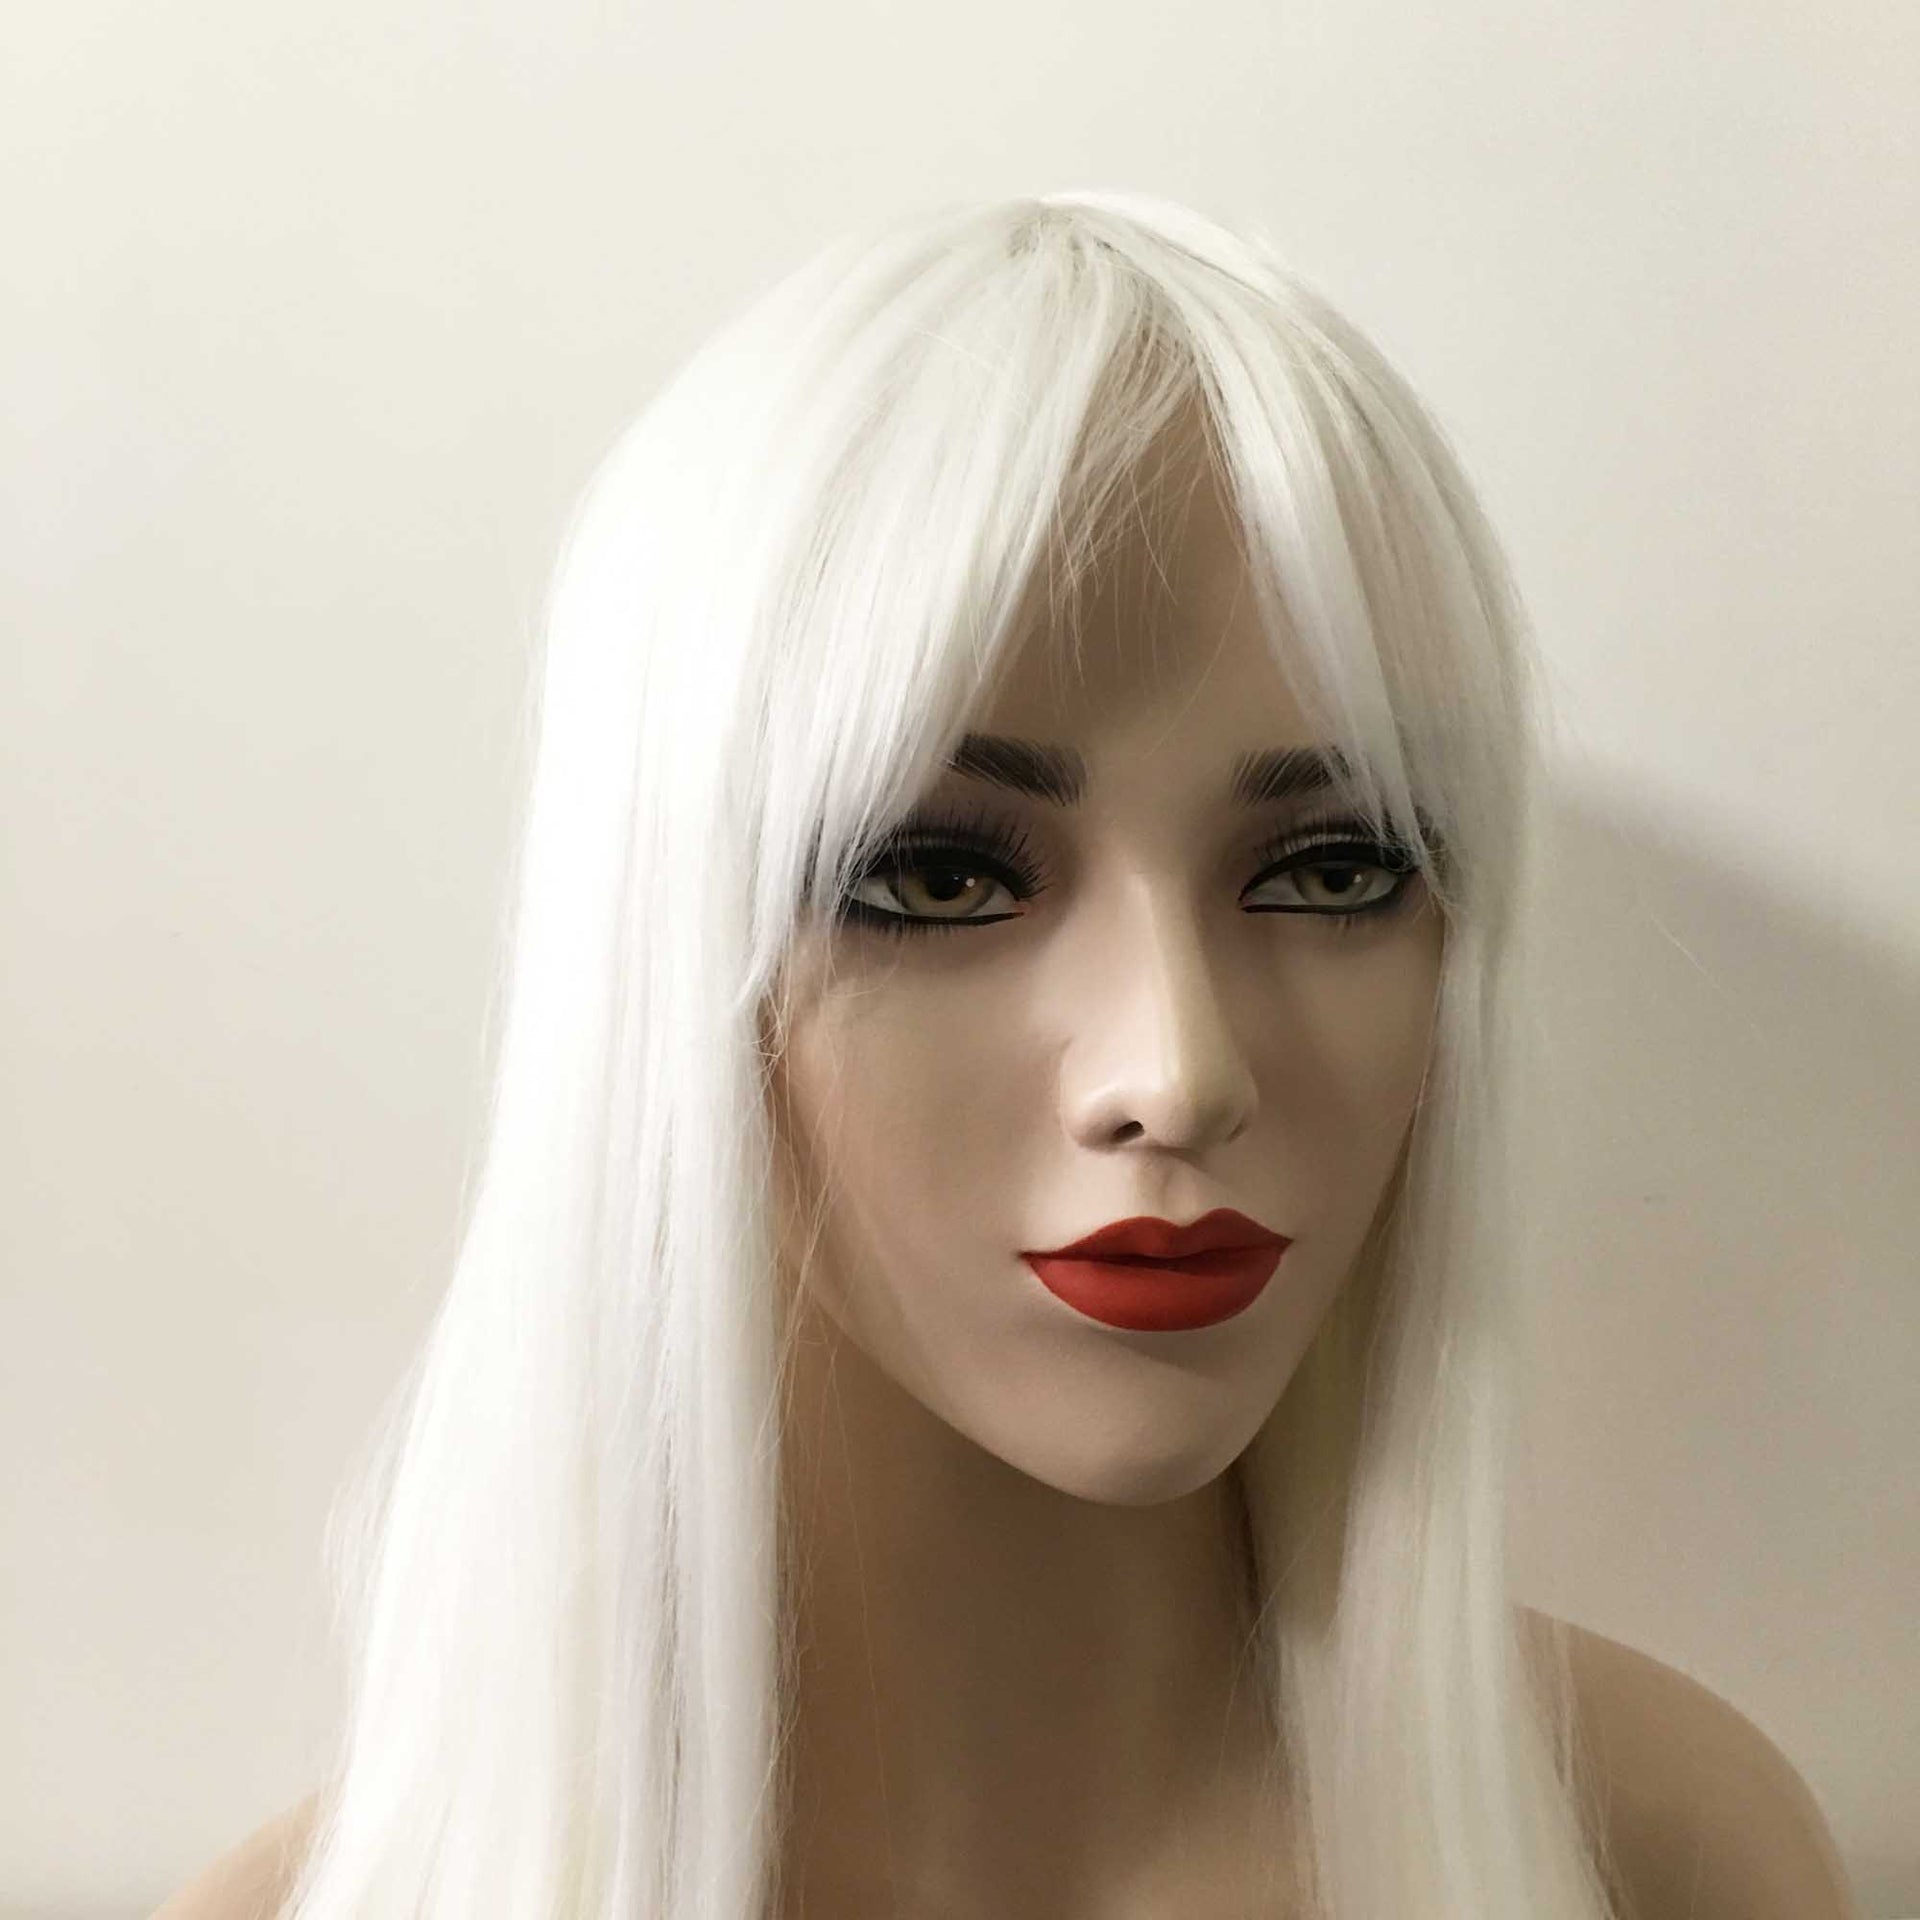 nevermindyrhead Women Snow White Long Straight Fringe Bangs Wig